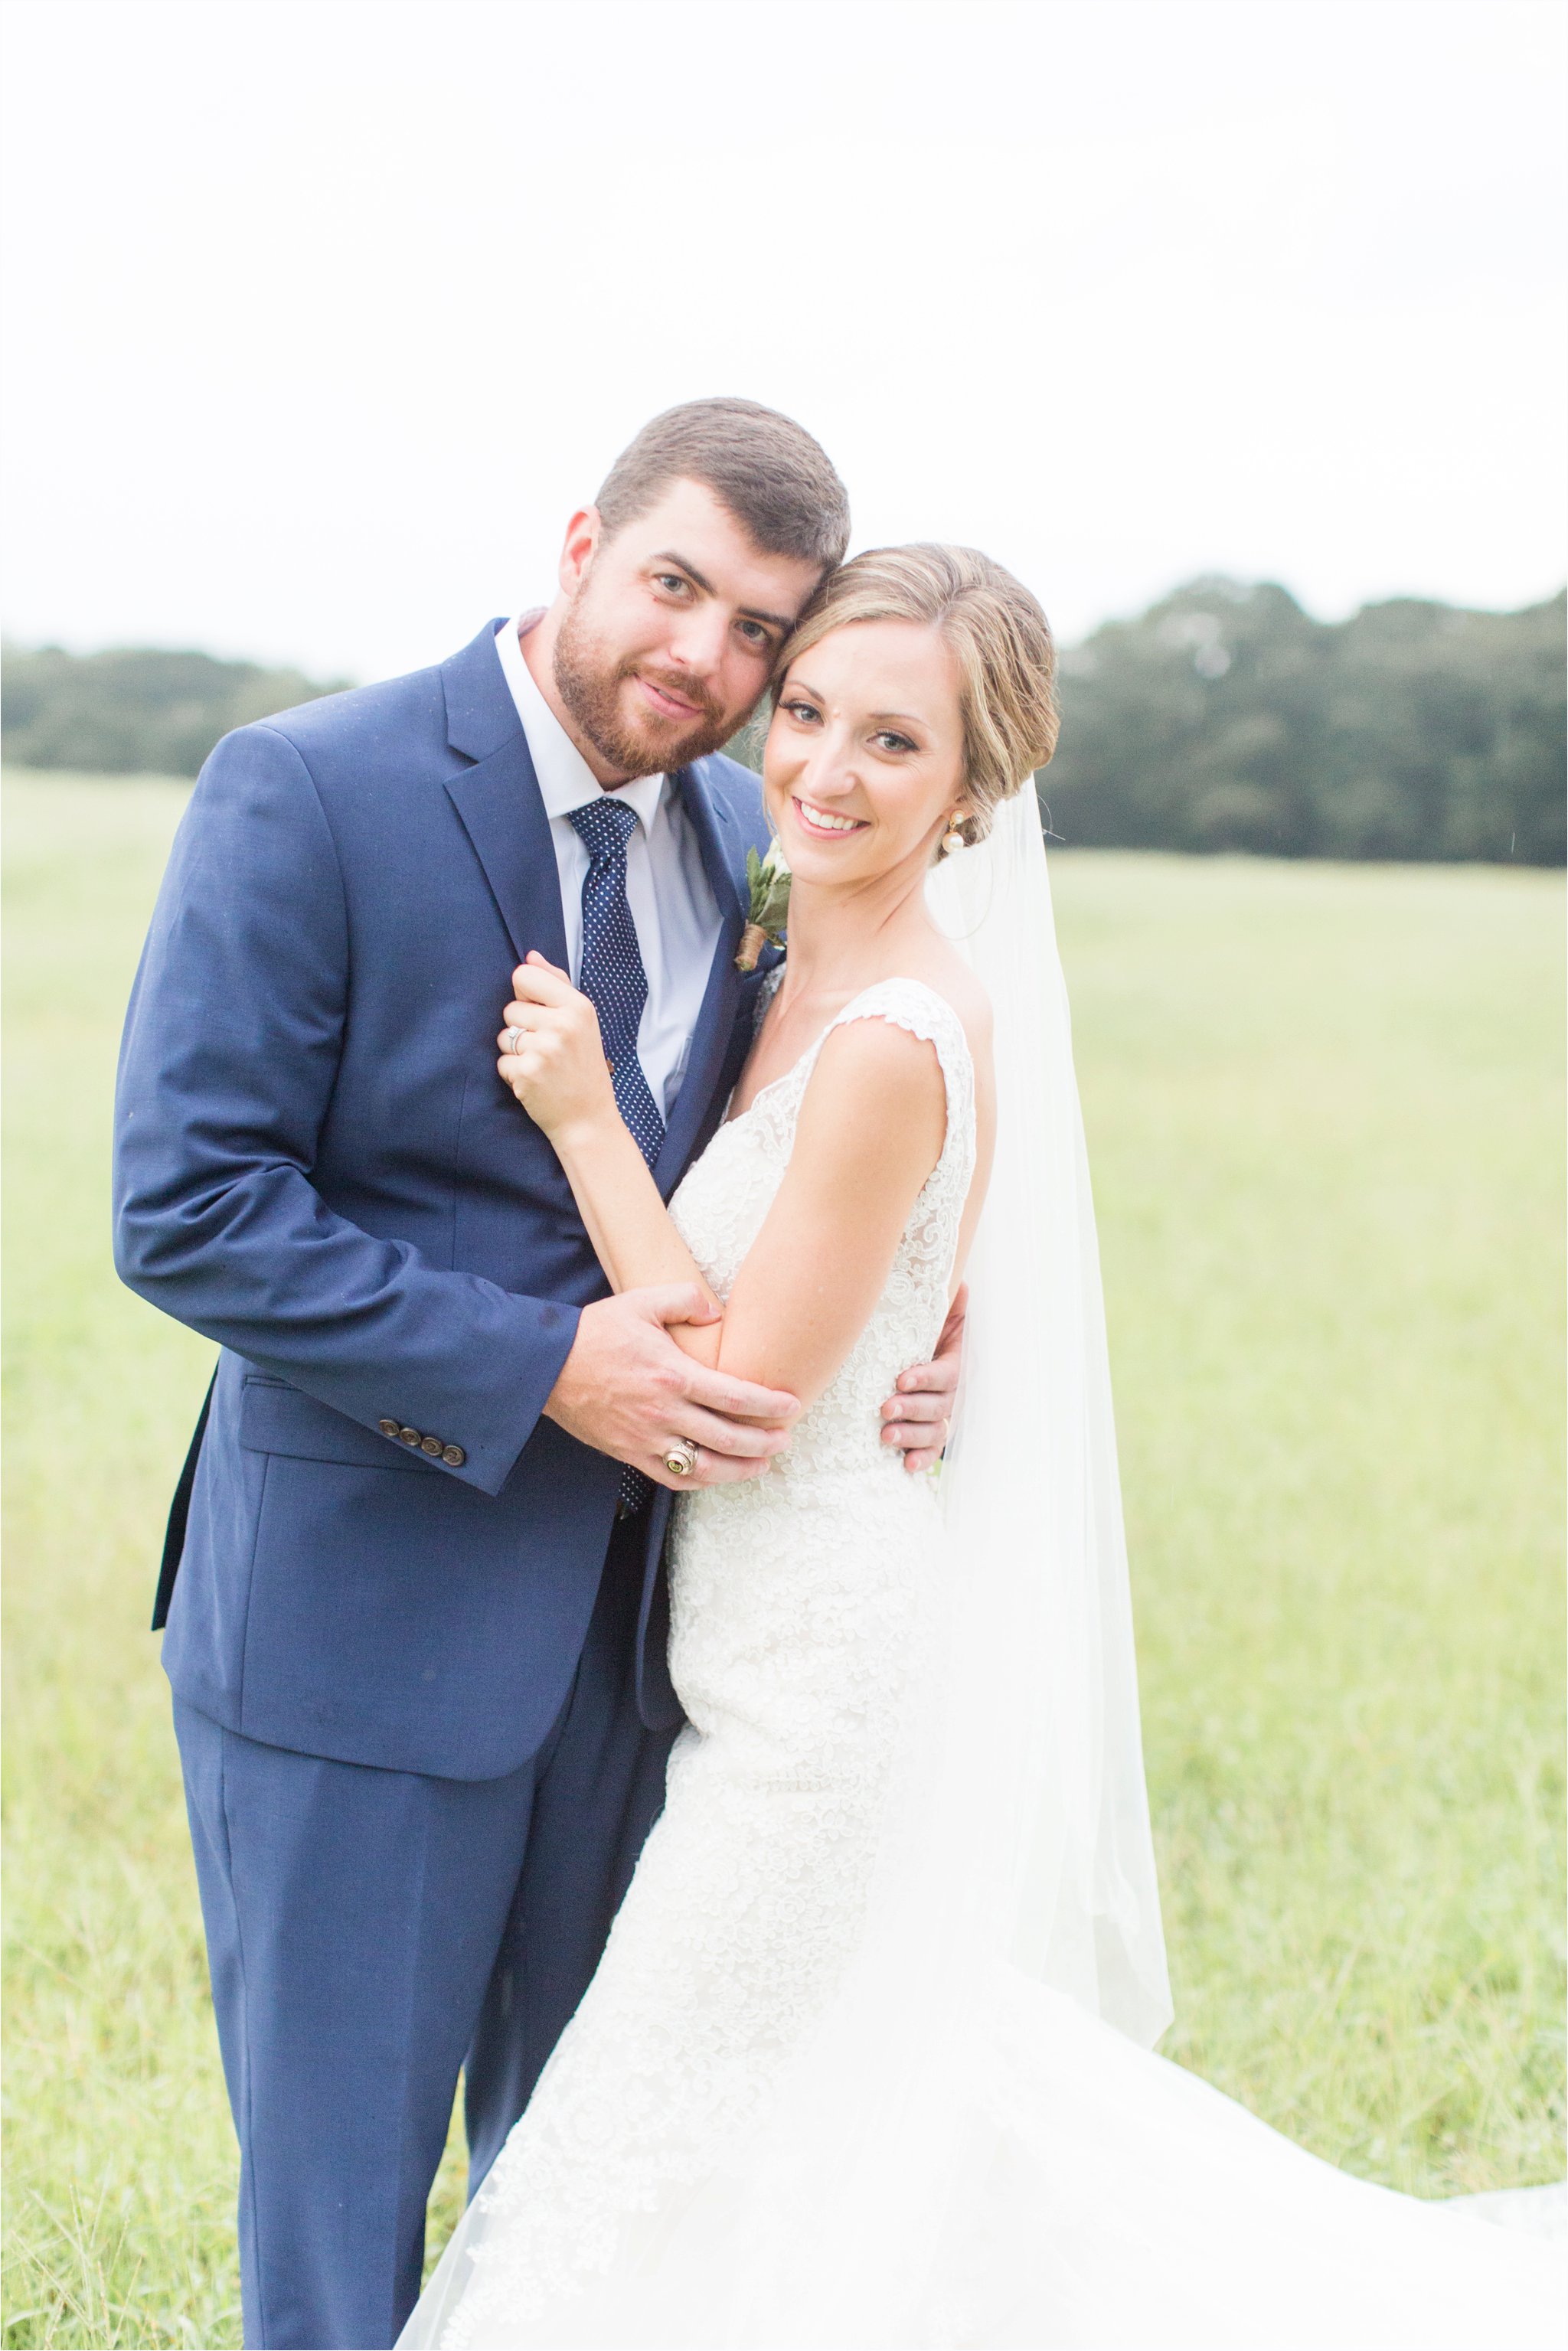 Outdoor Southern Wedding | South Carolina Wedding Photography | Christa Rene Photography